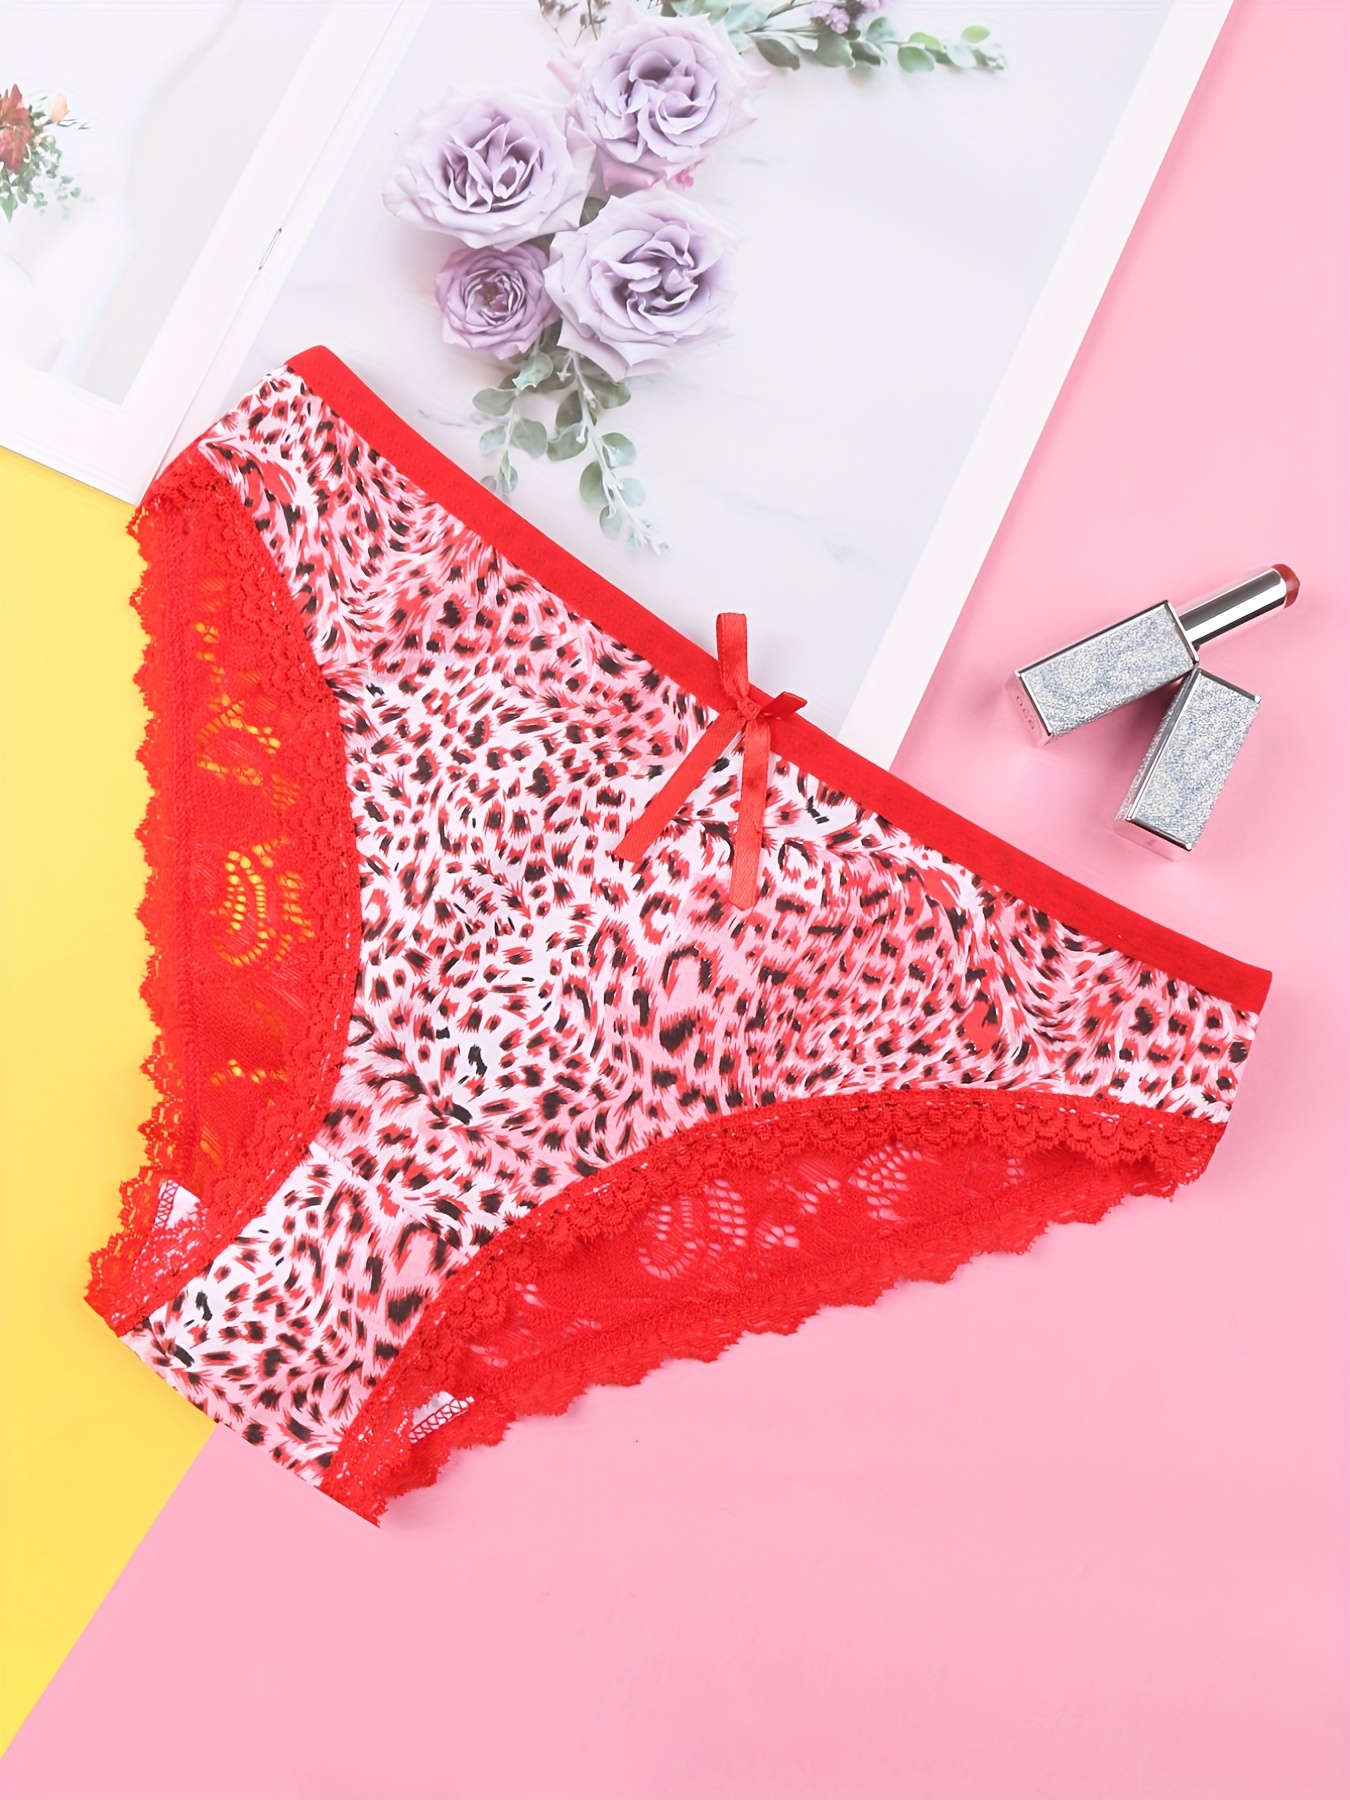 Leopard Print Sexy Briefs Lace Edge Underwear Soft Women's Pink Cute Panties